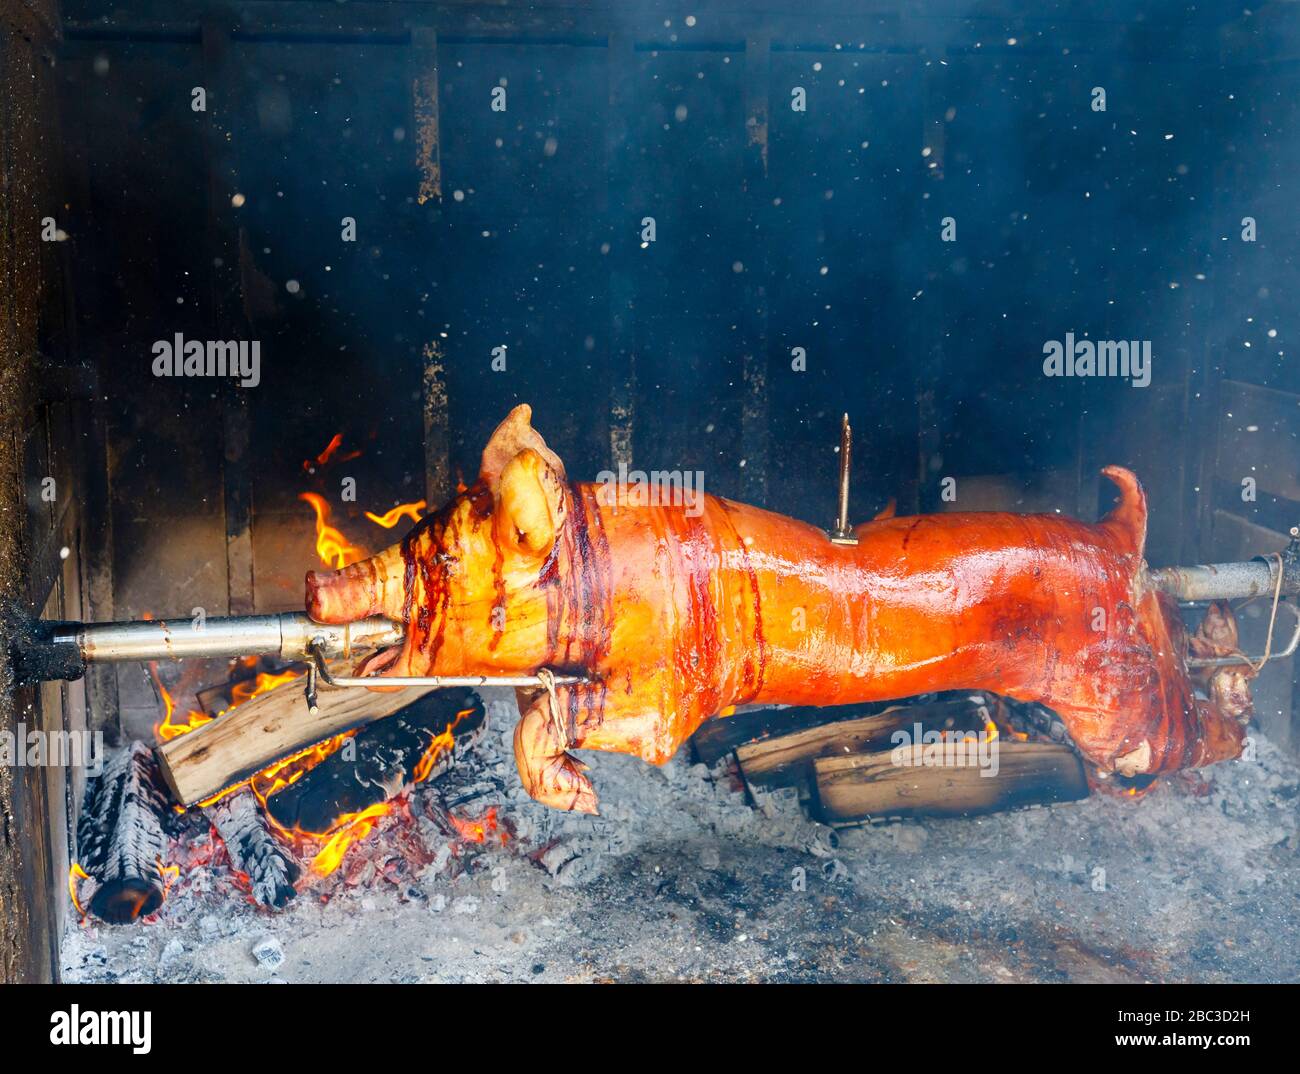 Hog roast: whole spit roast pig turning over a log fire for a barbecue at Postojnska Jama (Postojna Cave Park), Slovenia, central & eastern Europe Stock Photo